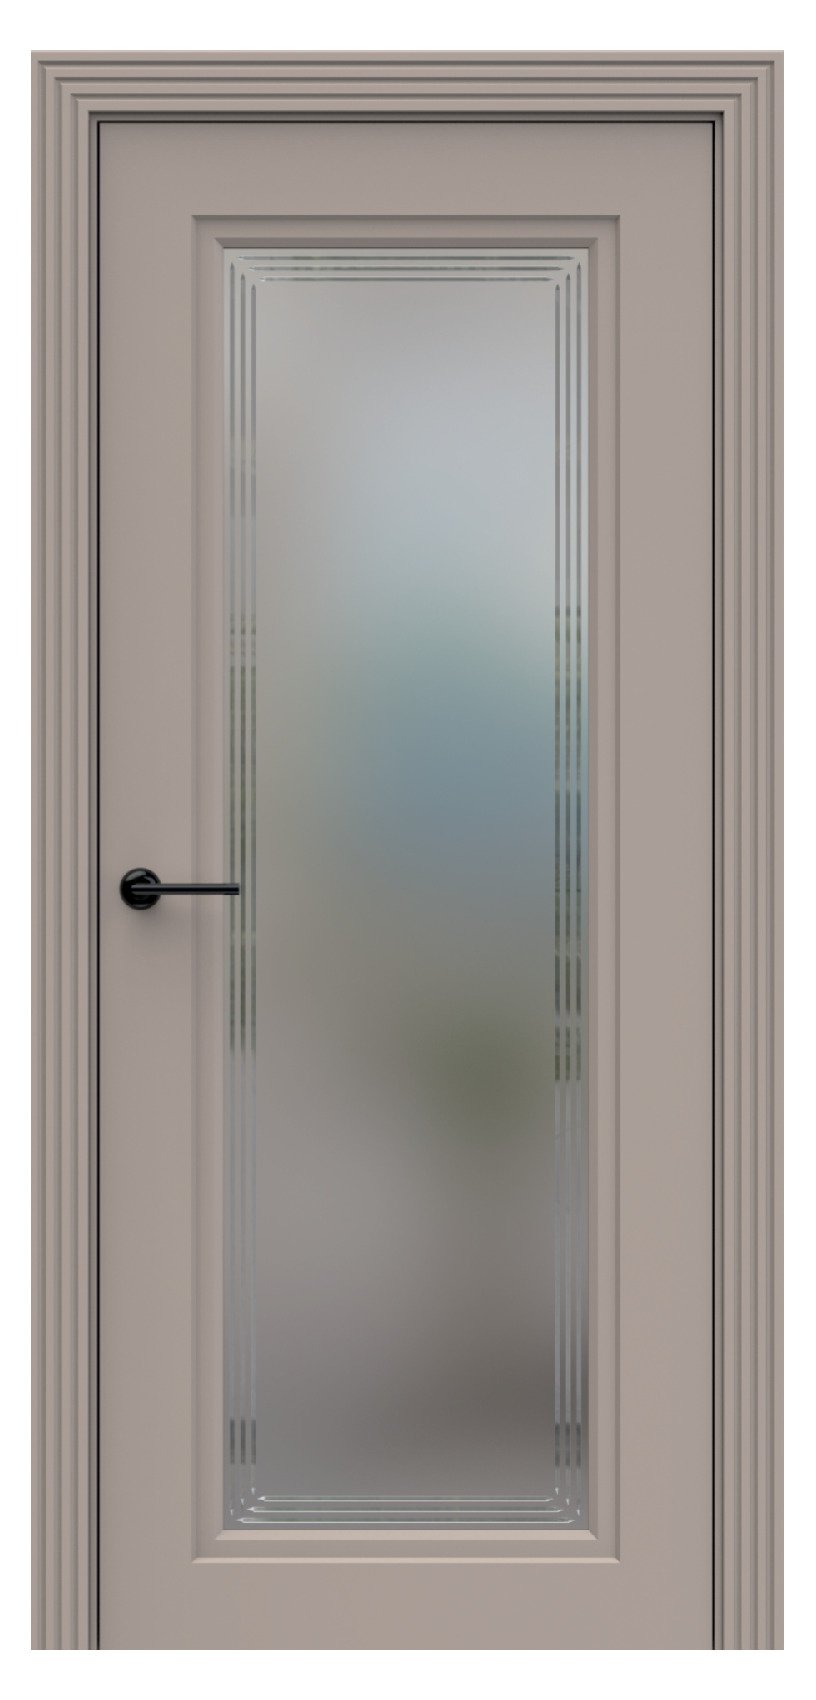 Questdoors Межкомнатная дверь QI8, арт. 17969 - фото №1